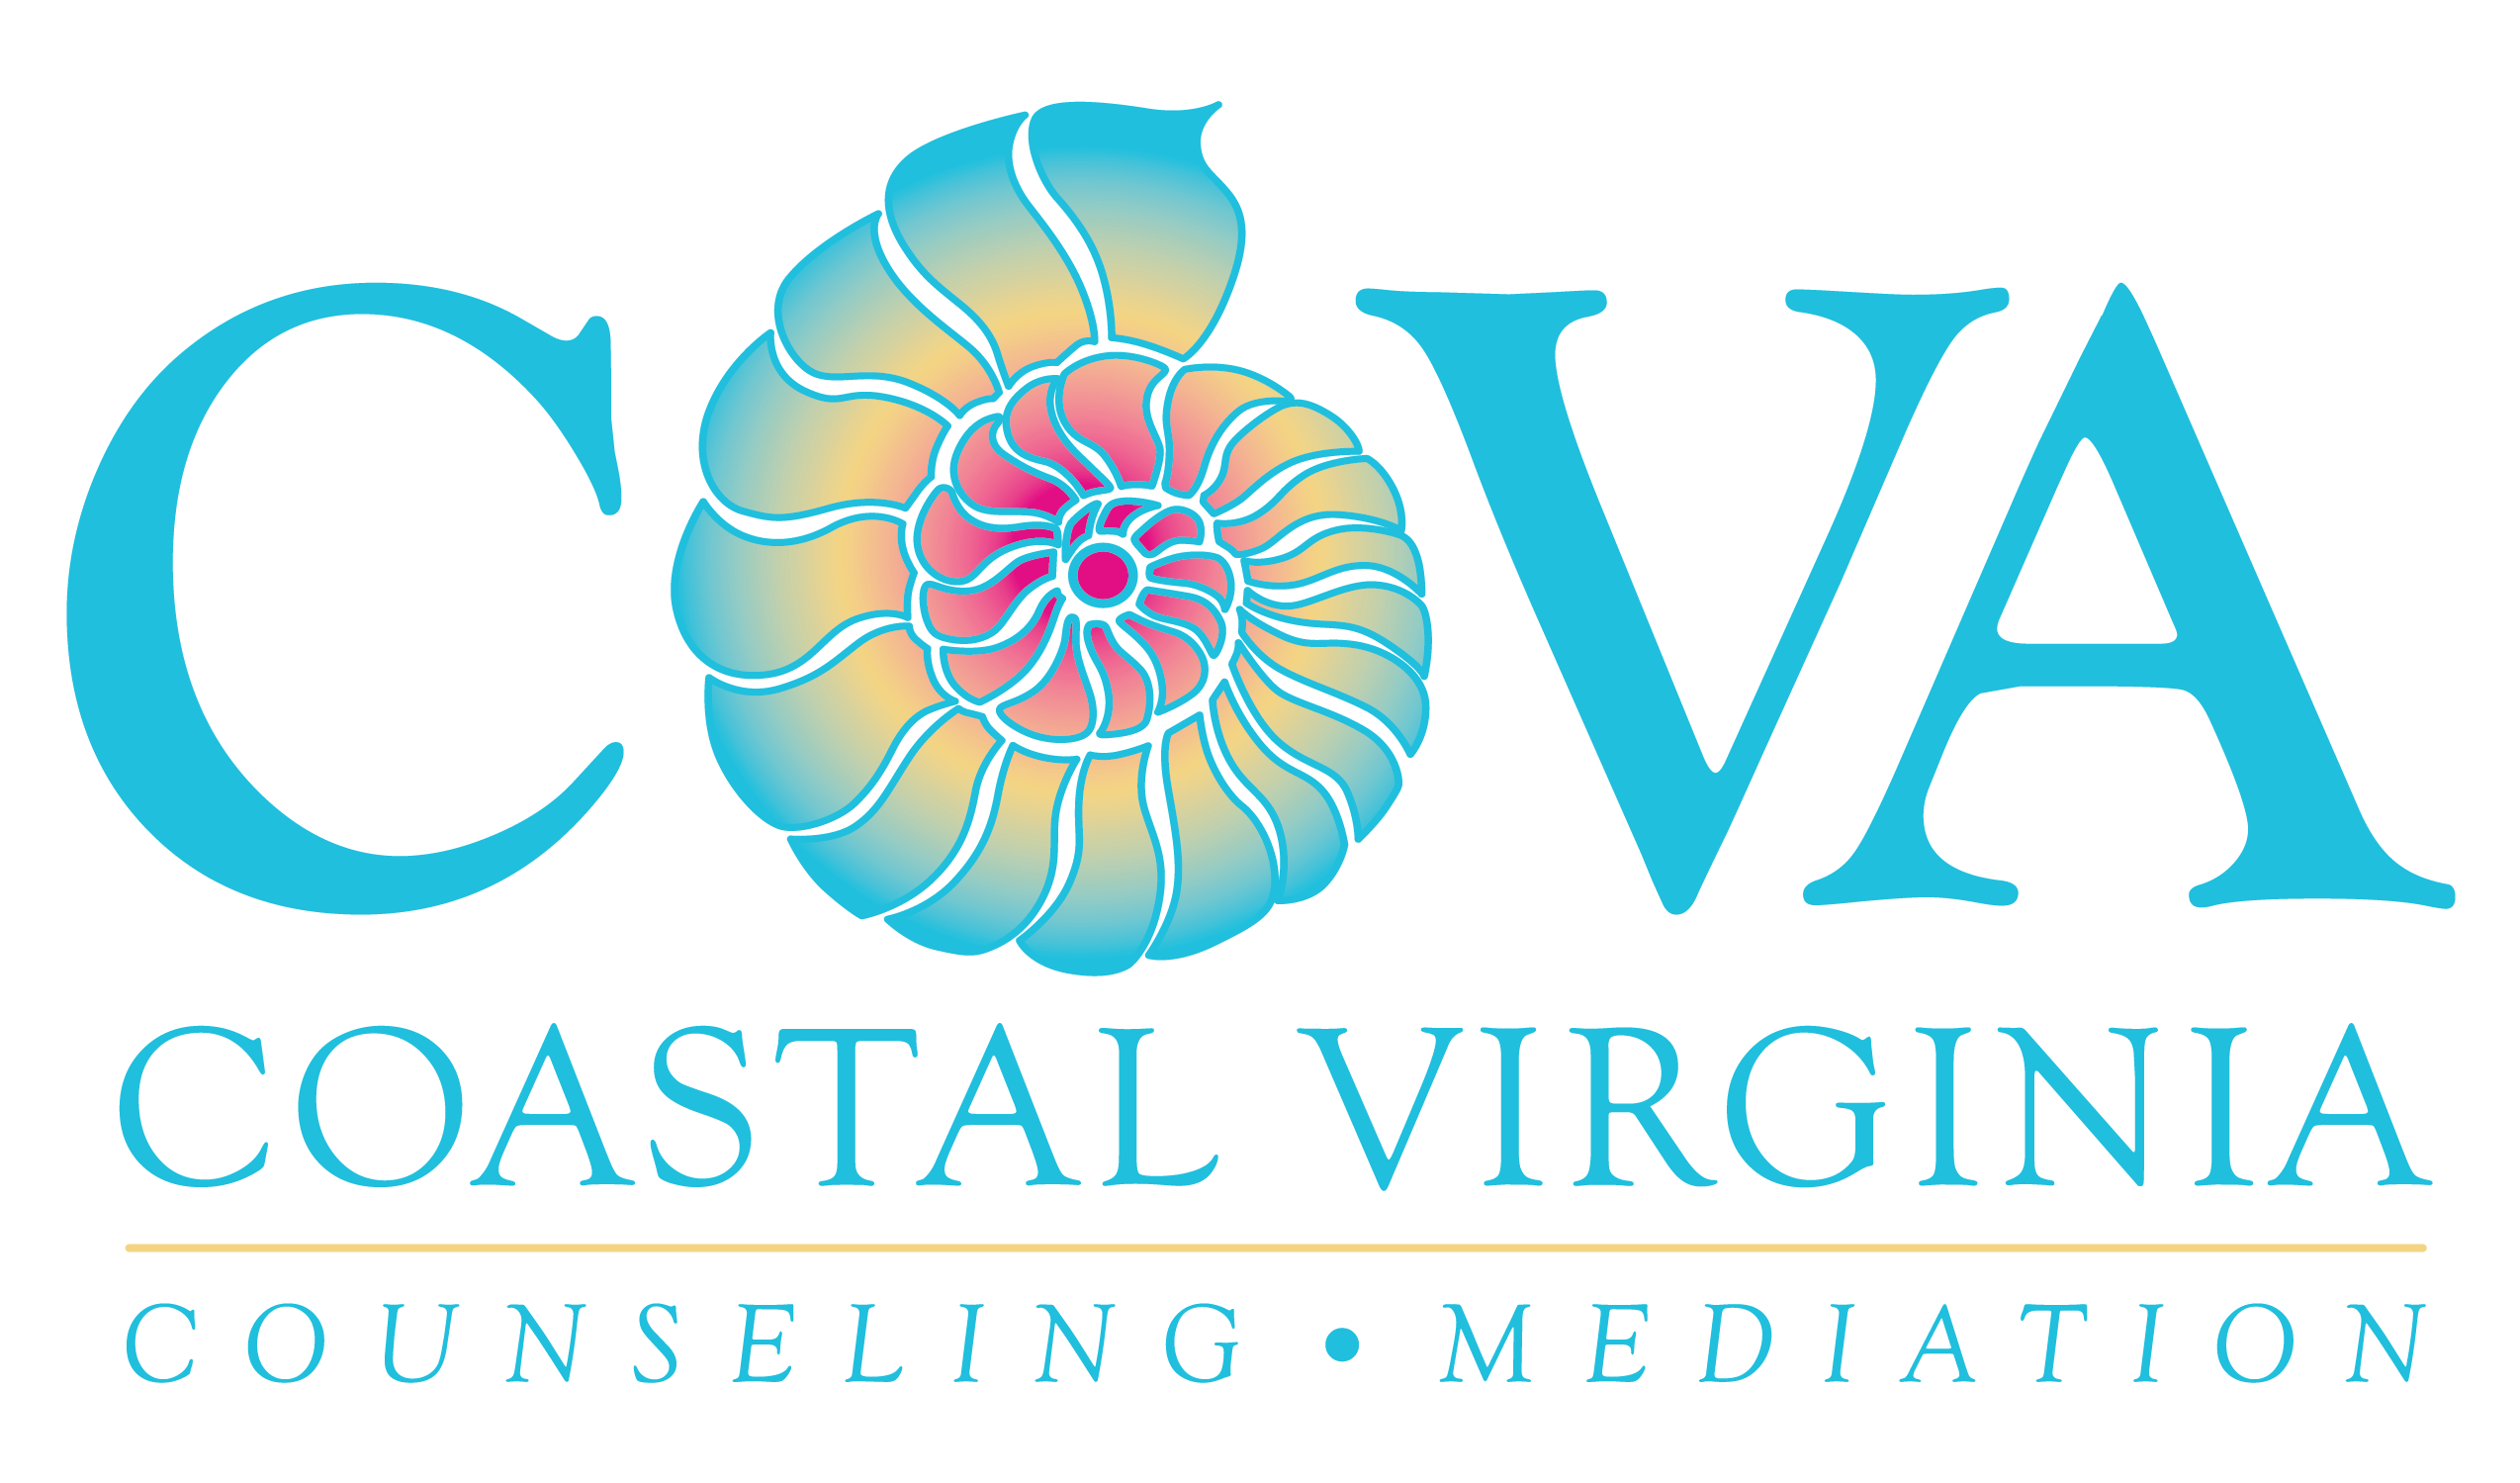 Coastal Virginia Counseling